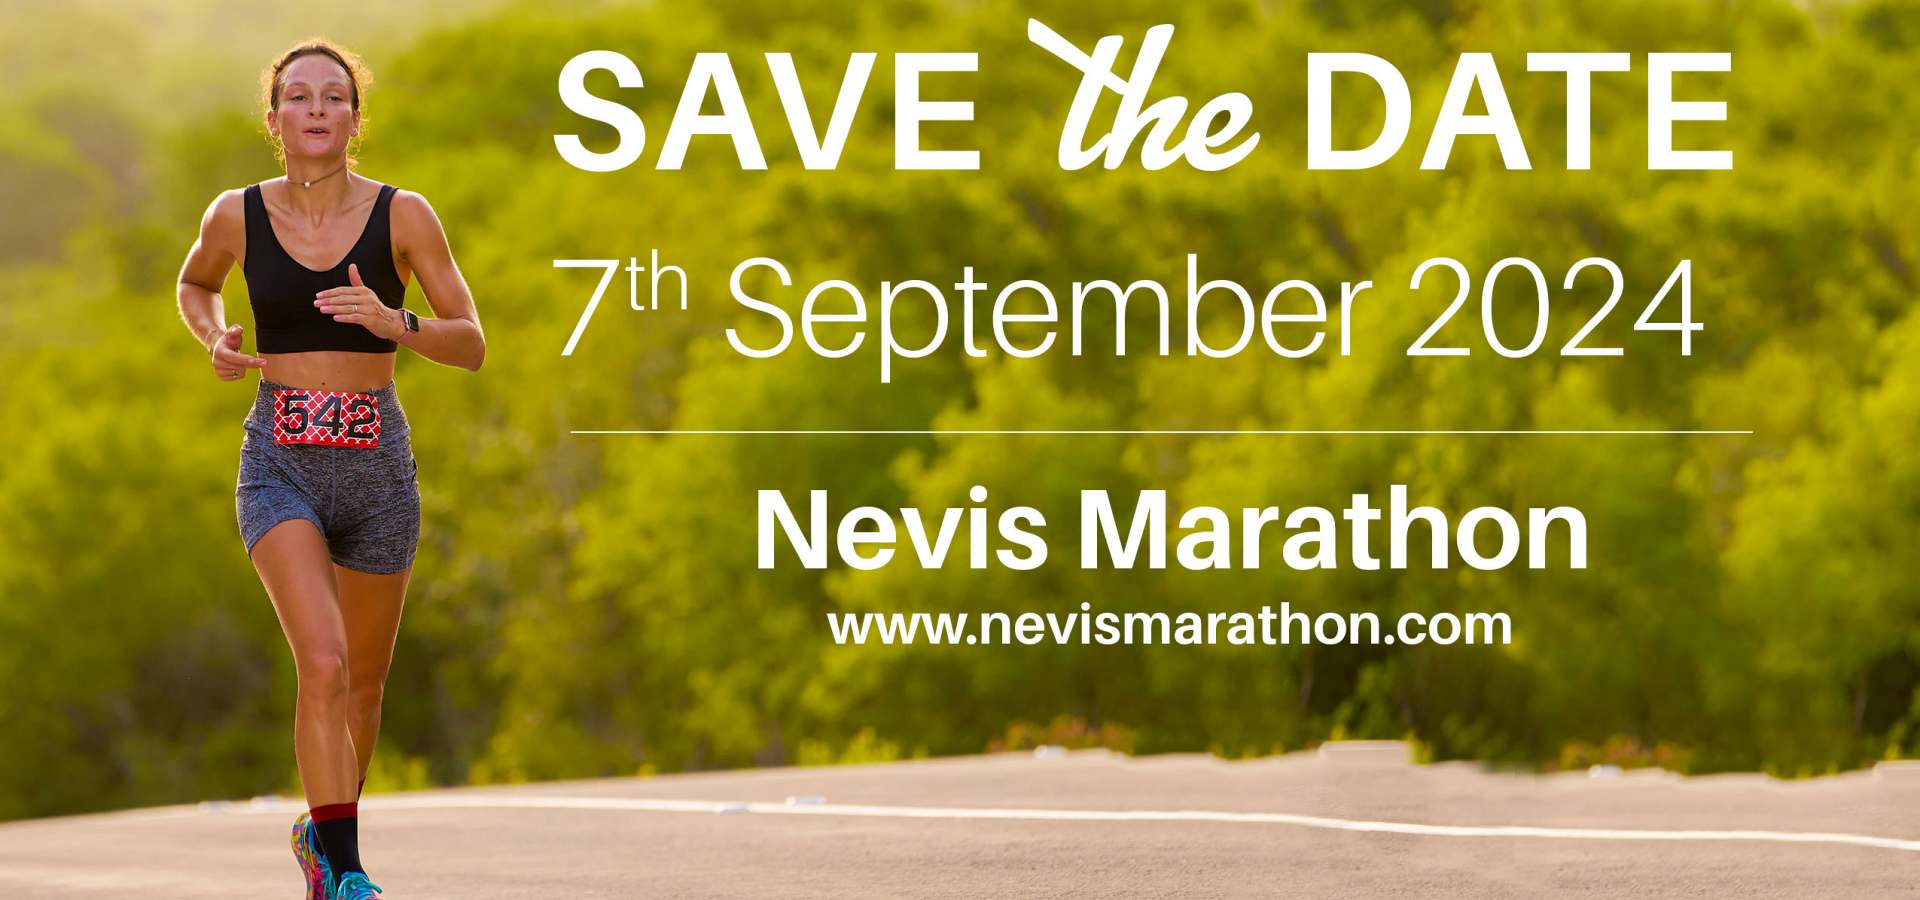 Nevis Marathon & Running Festival 2024